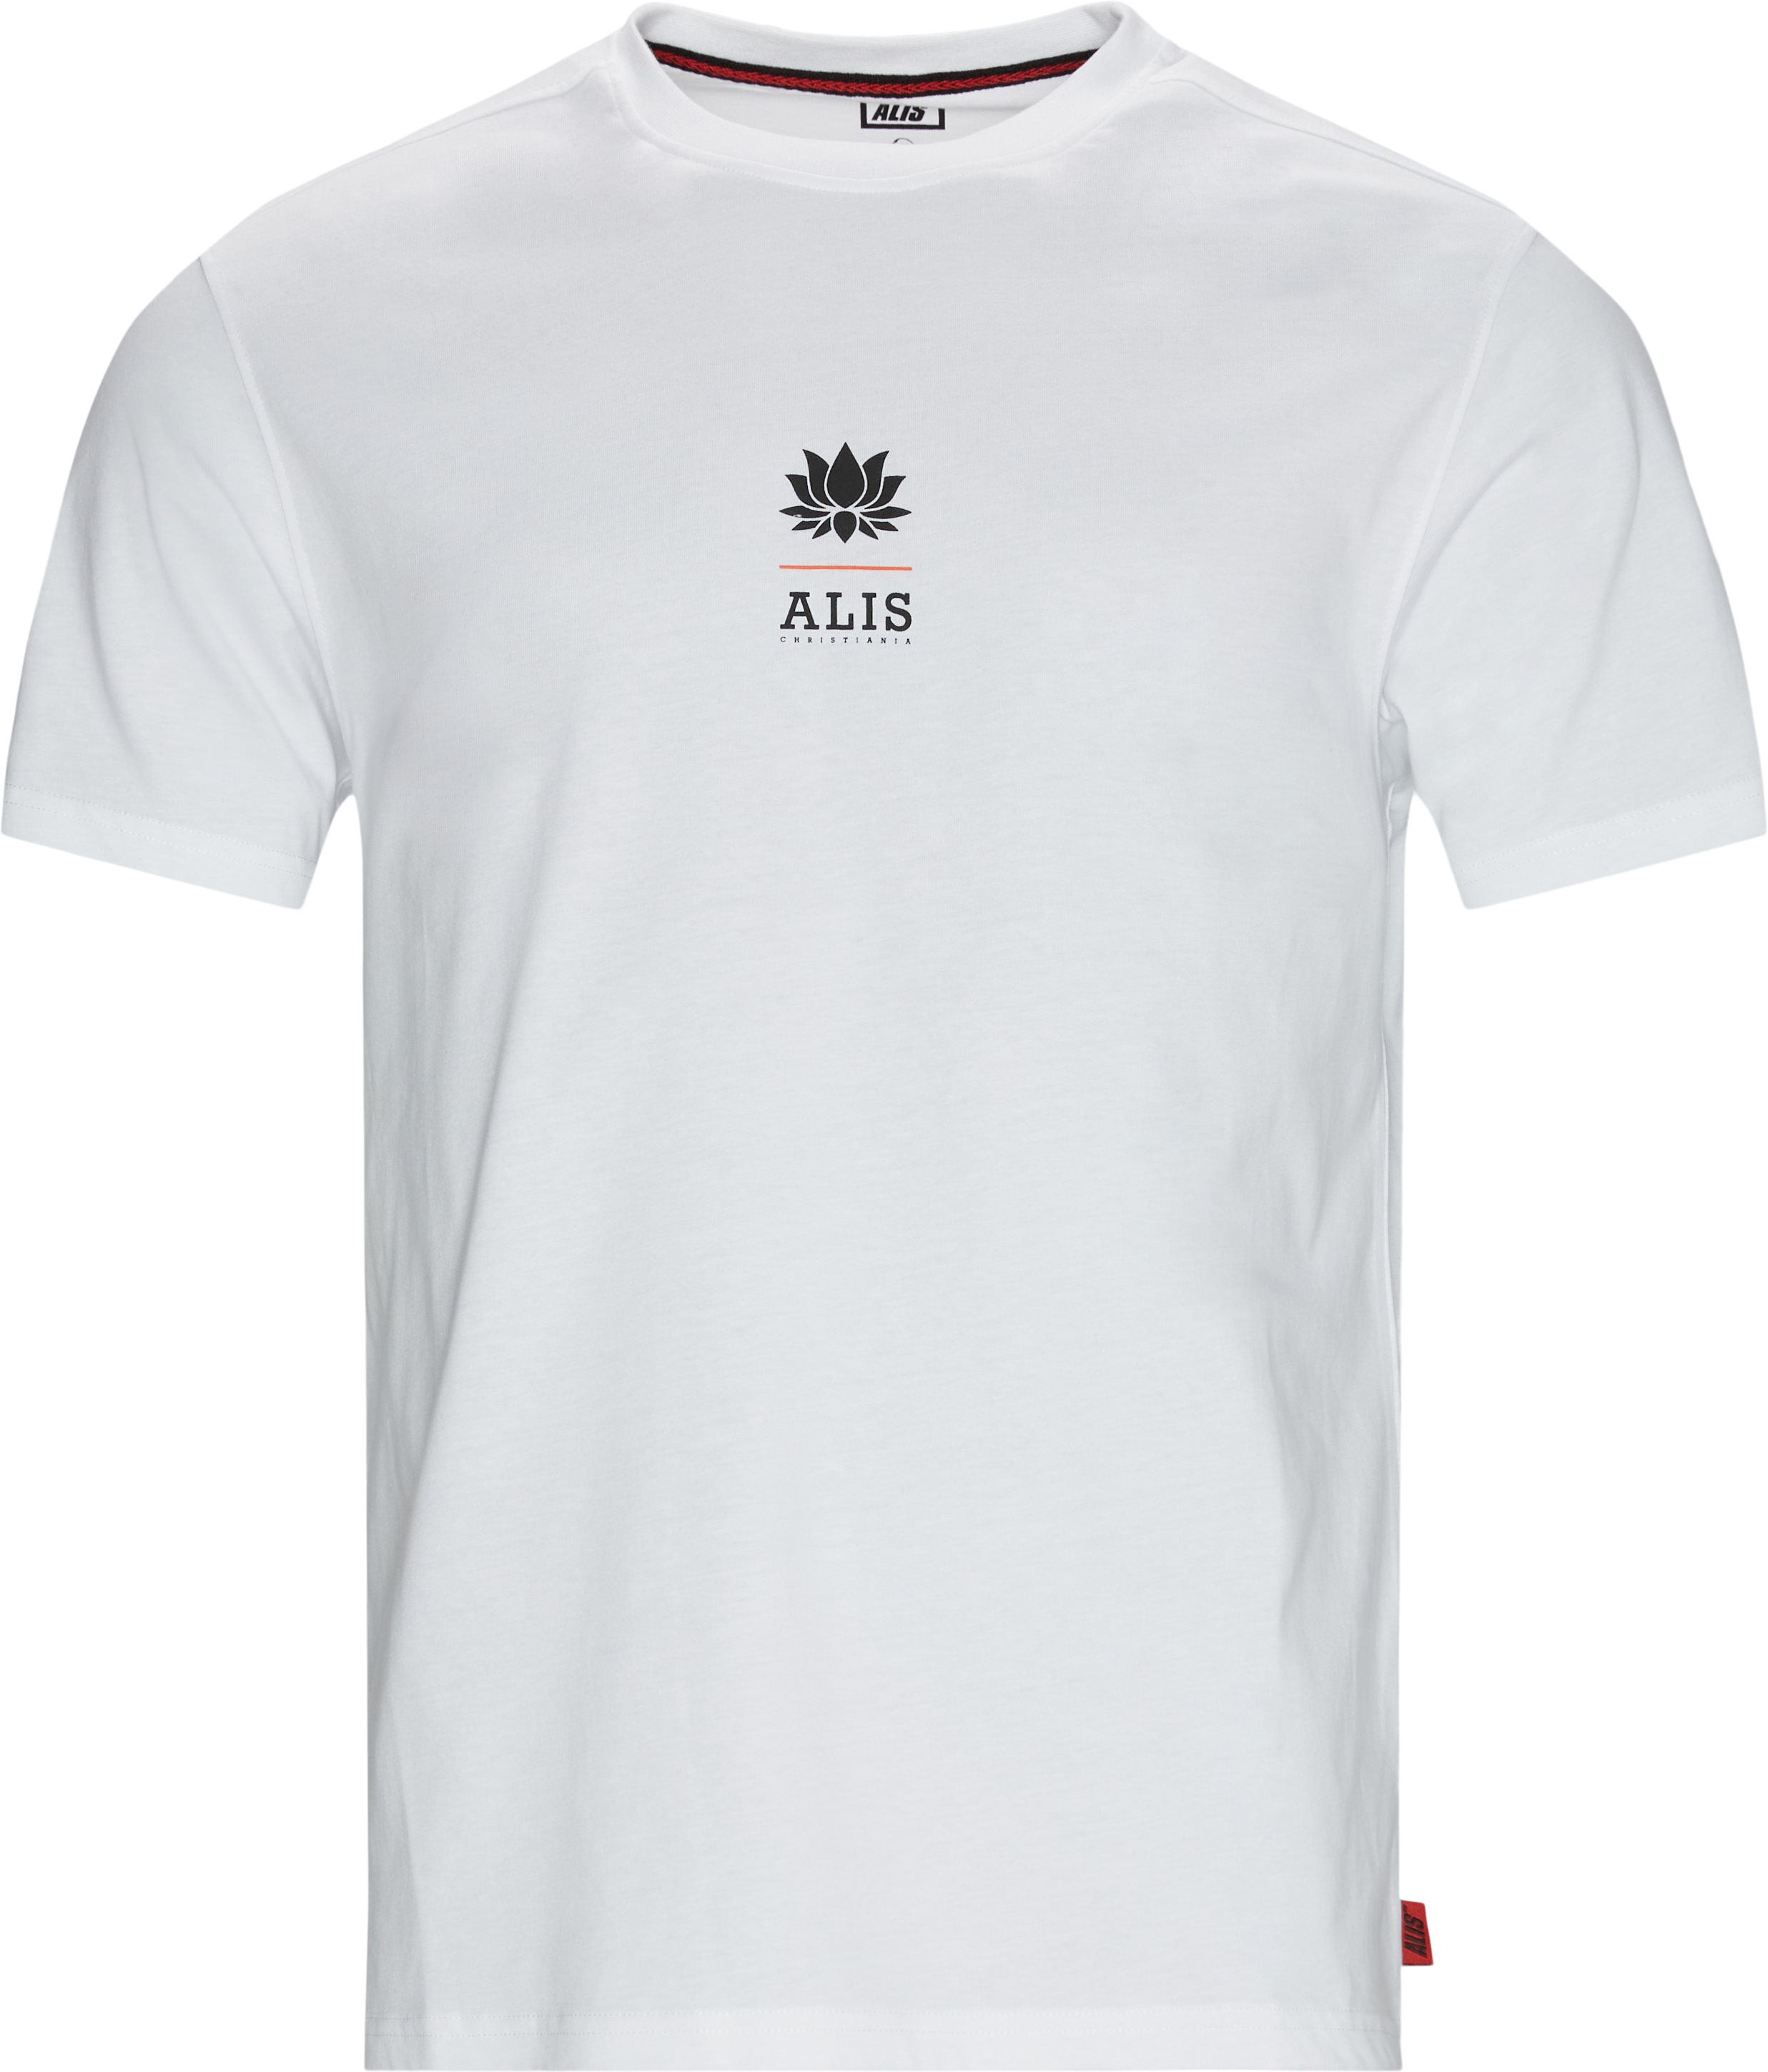 Miniature Lotus Tee - T-shirts - Regular fit - Hvid